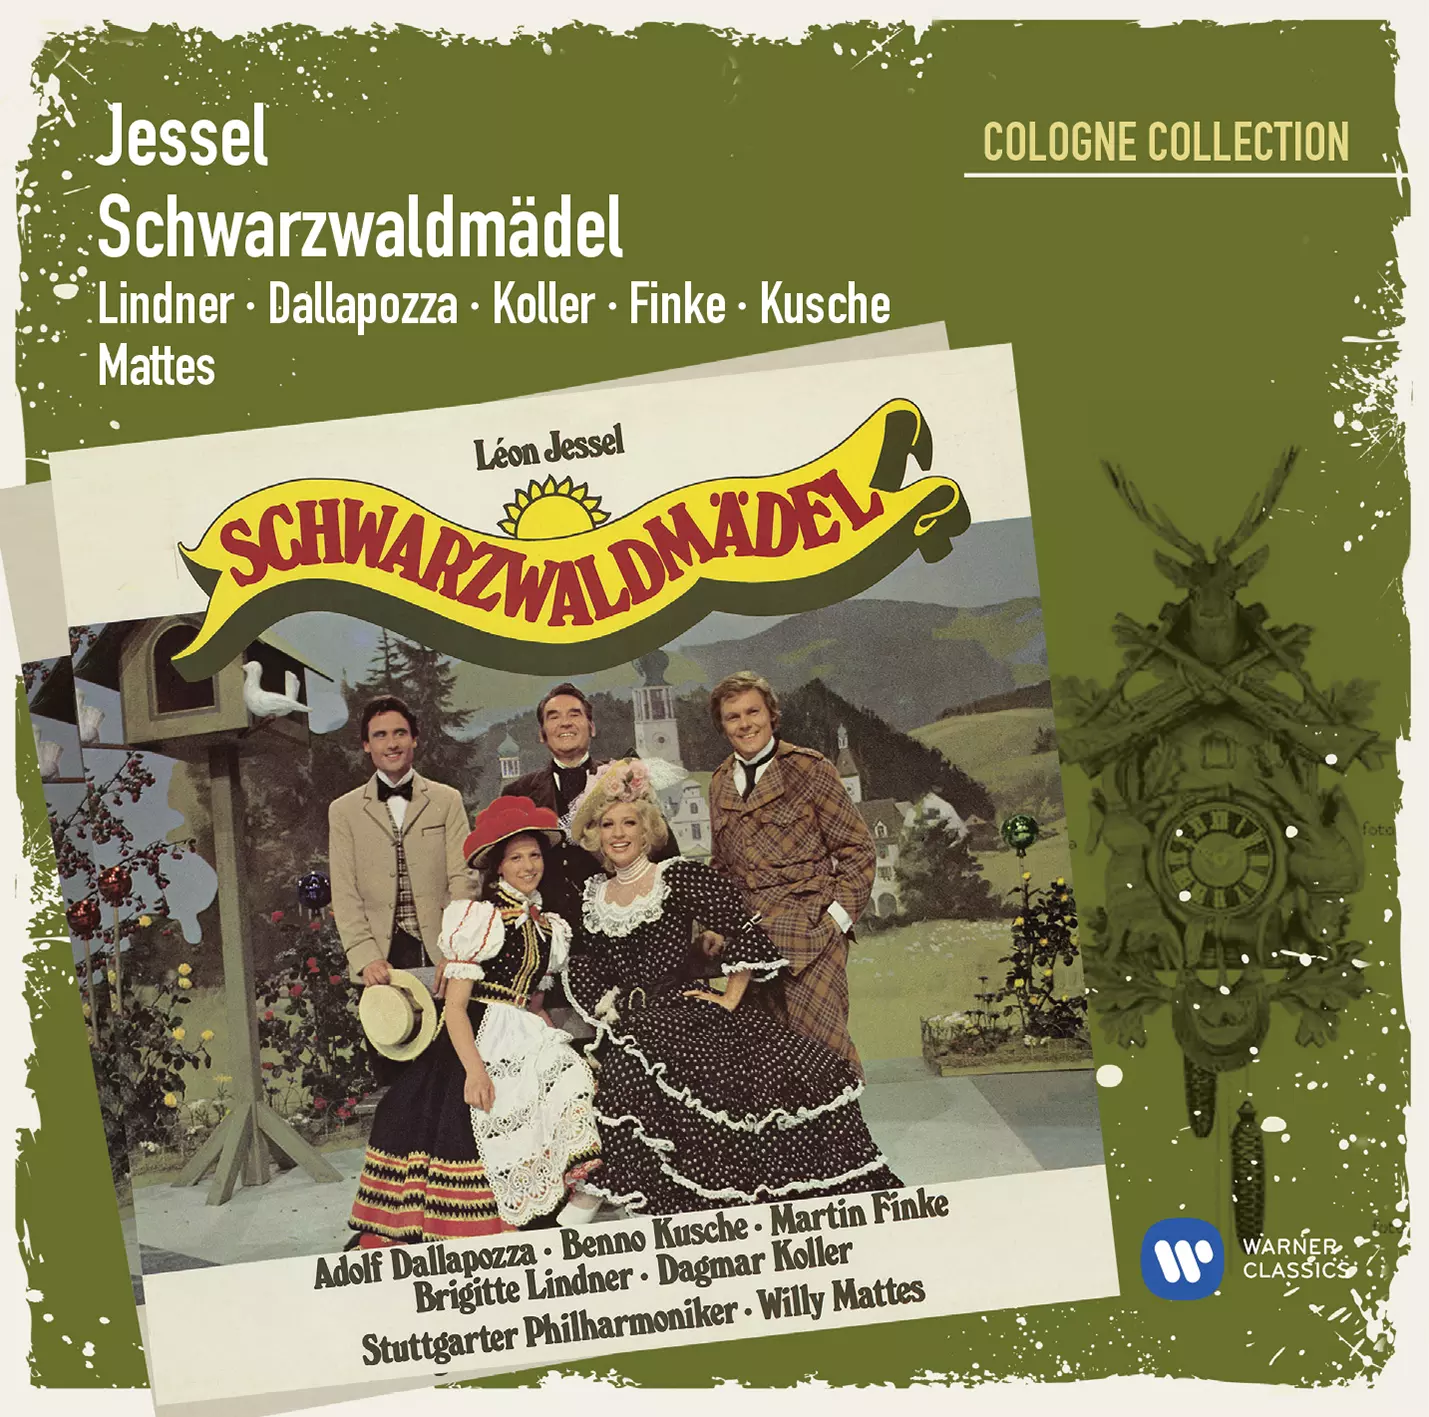 Leon Jessel: Schwarzwaldmädel (Cologne Collection)